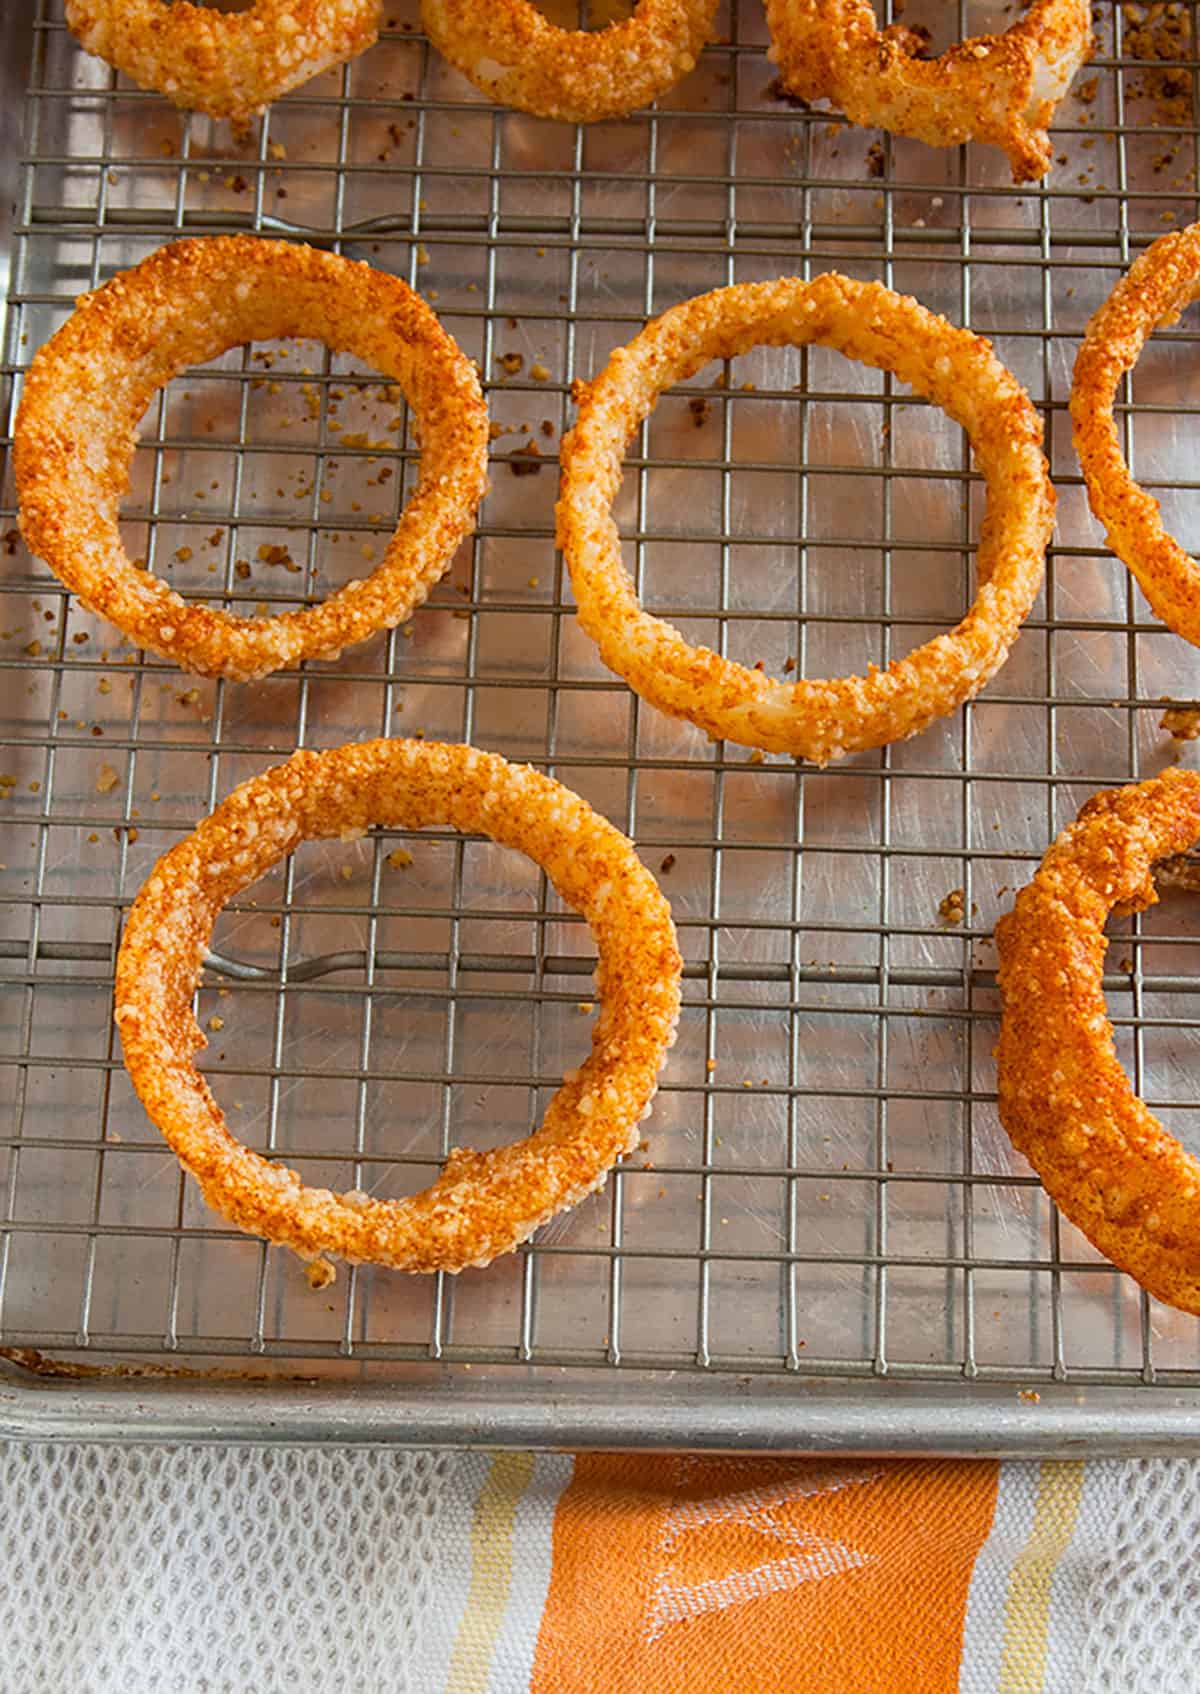 onion rings on a baking sheet.